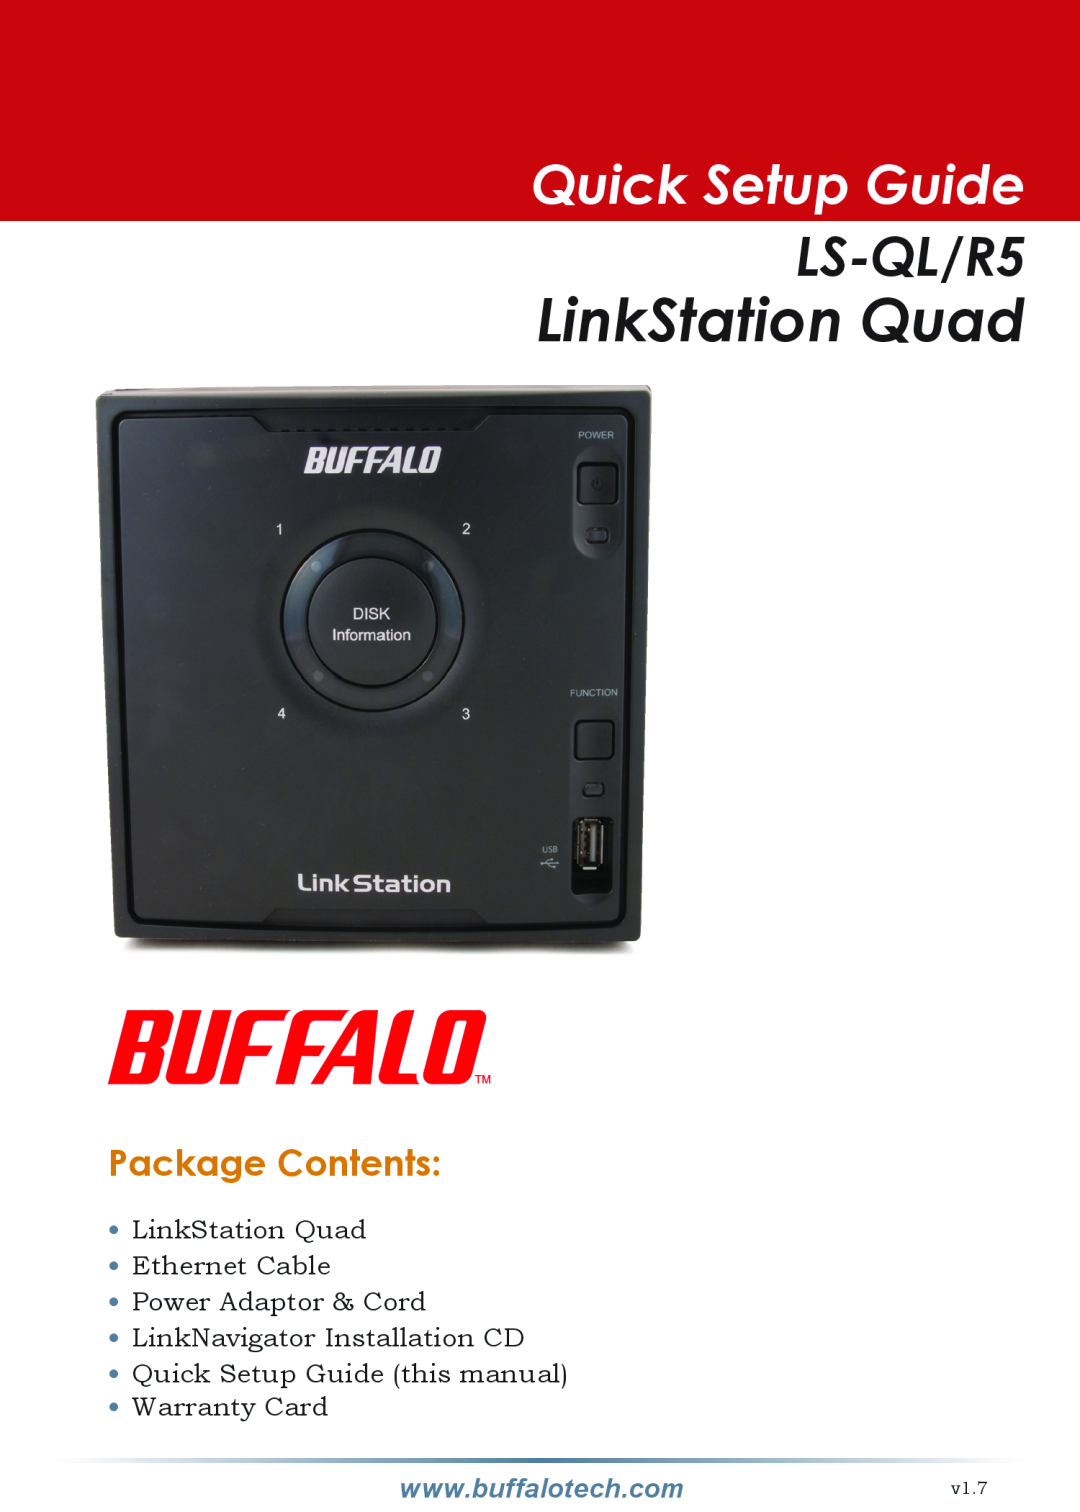 Buffalo Technology LS-QL/R5 setup guide Package Contents, LinkStation Quad, Quick Setup Guide 